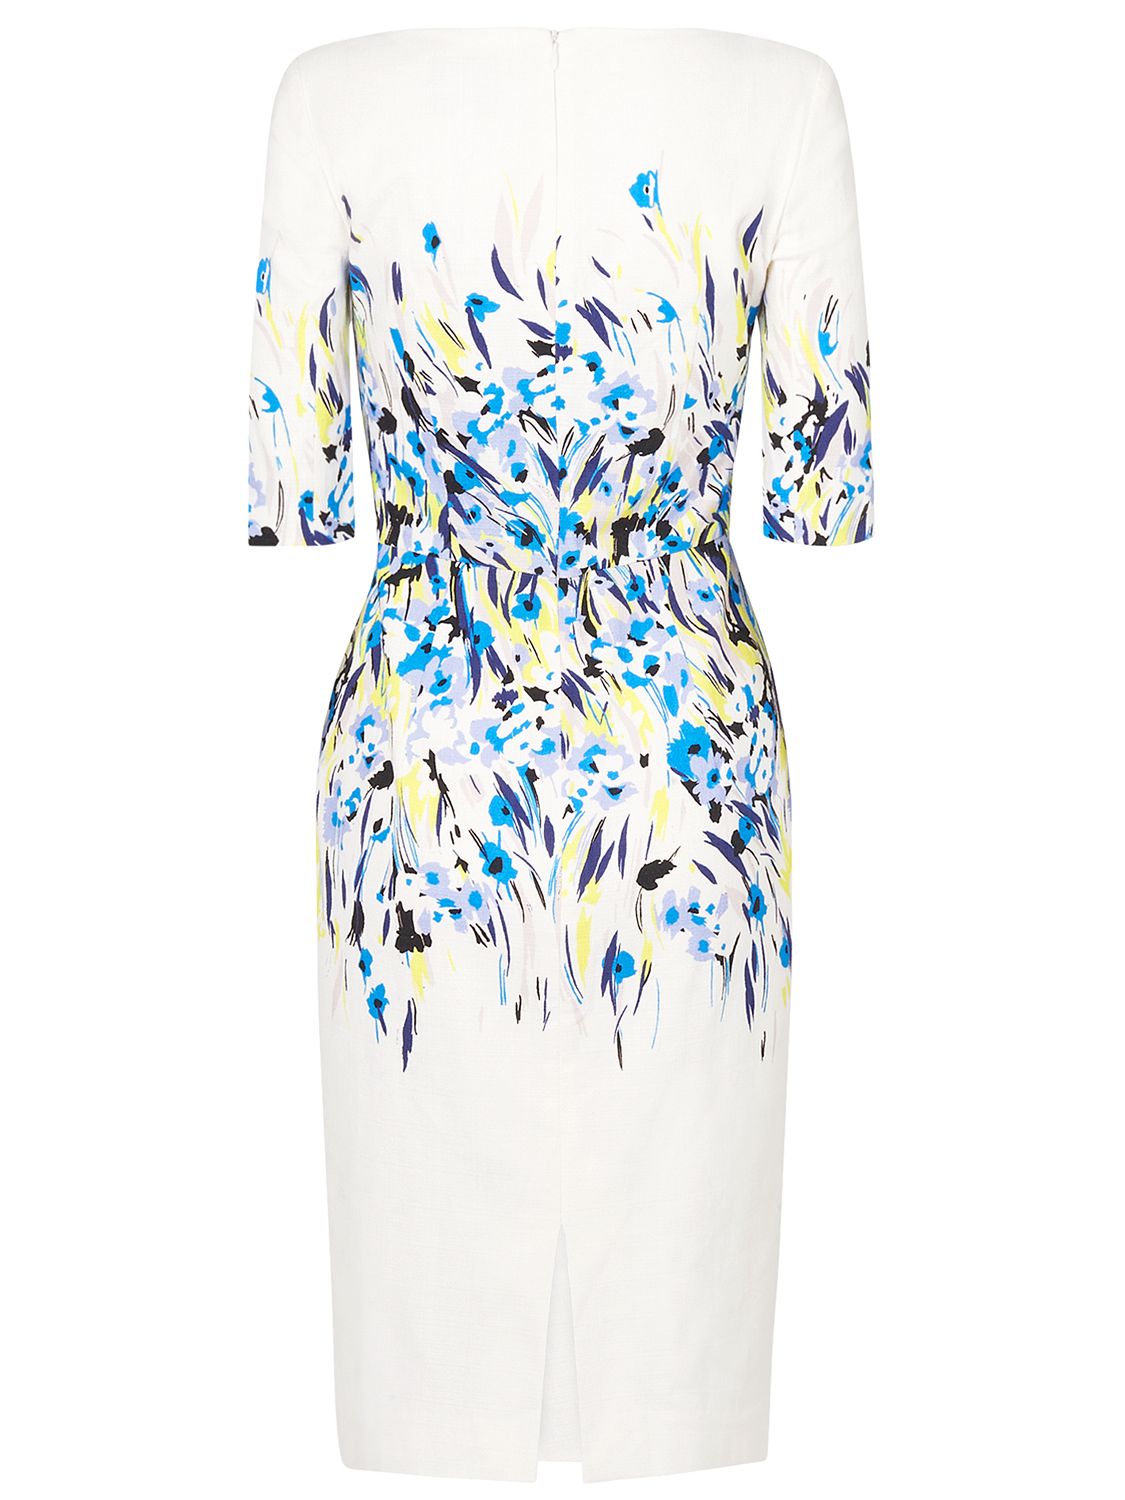 L.K. Bennett Bree Floral Dress, Multi at John Lewis & Partners